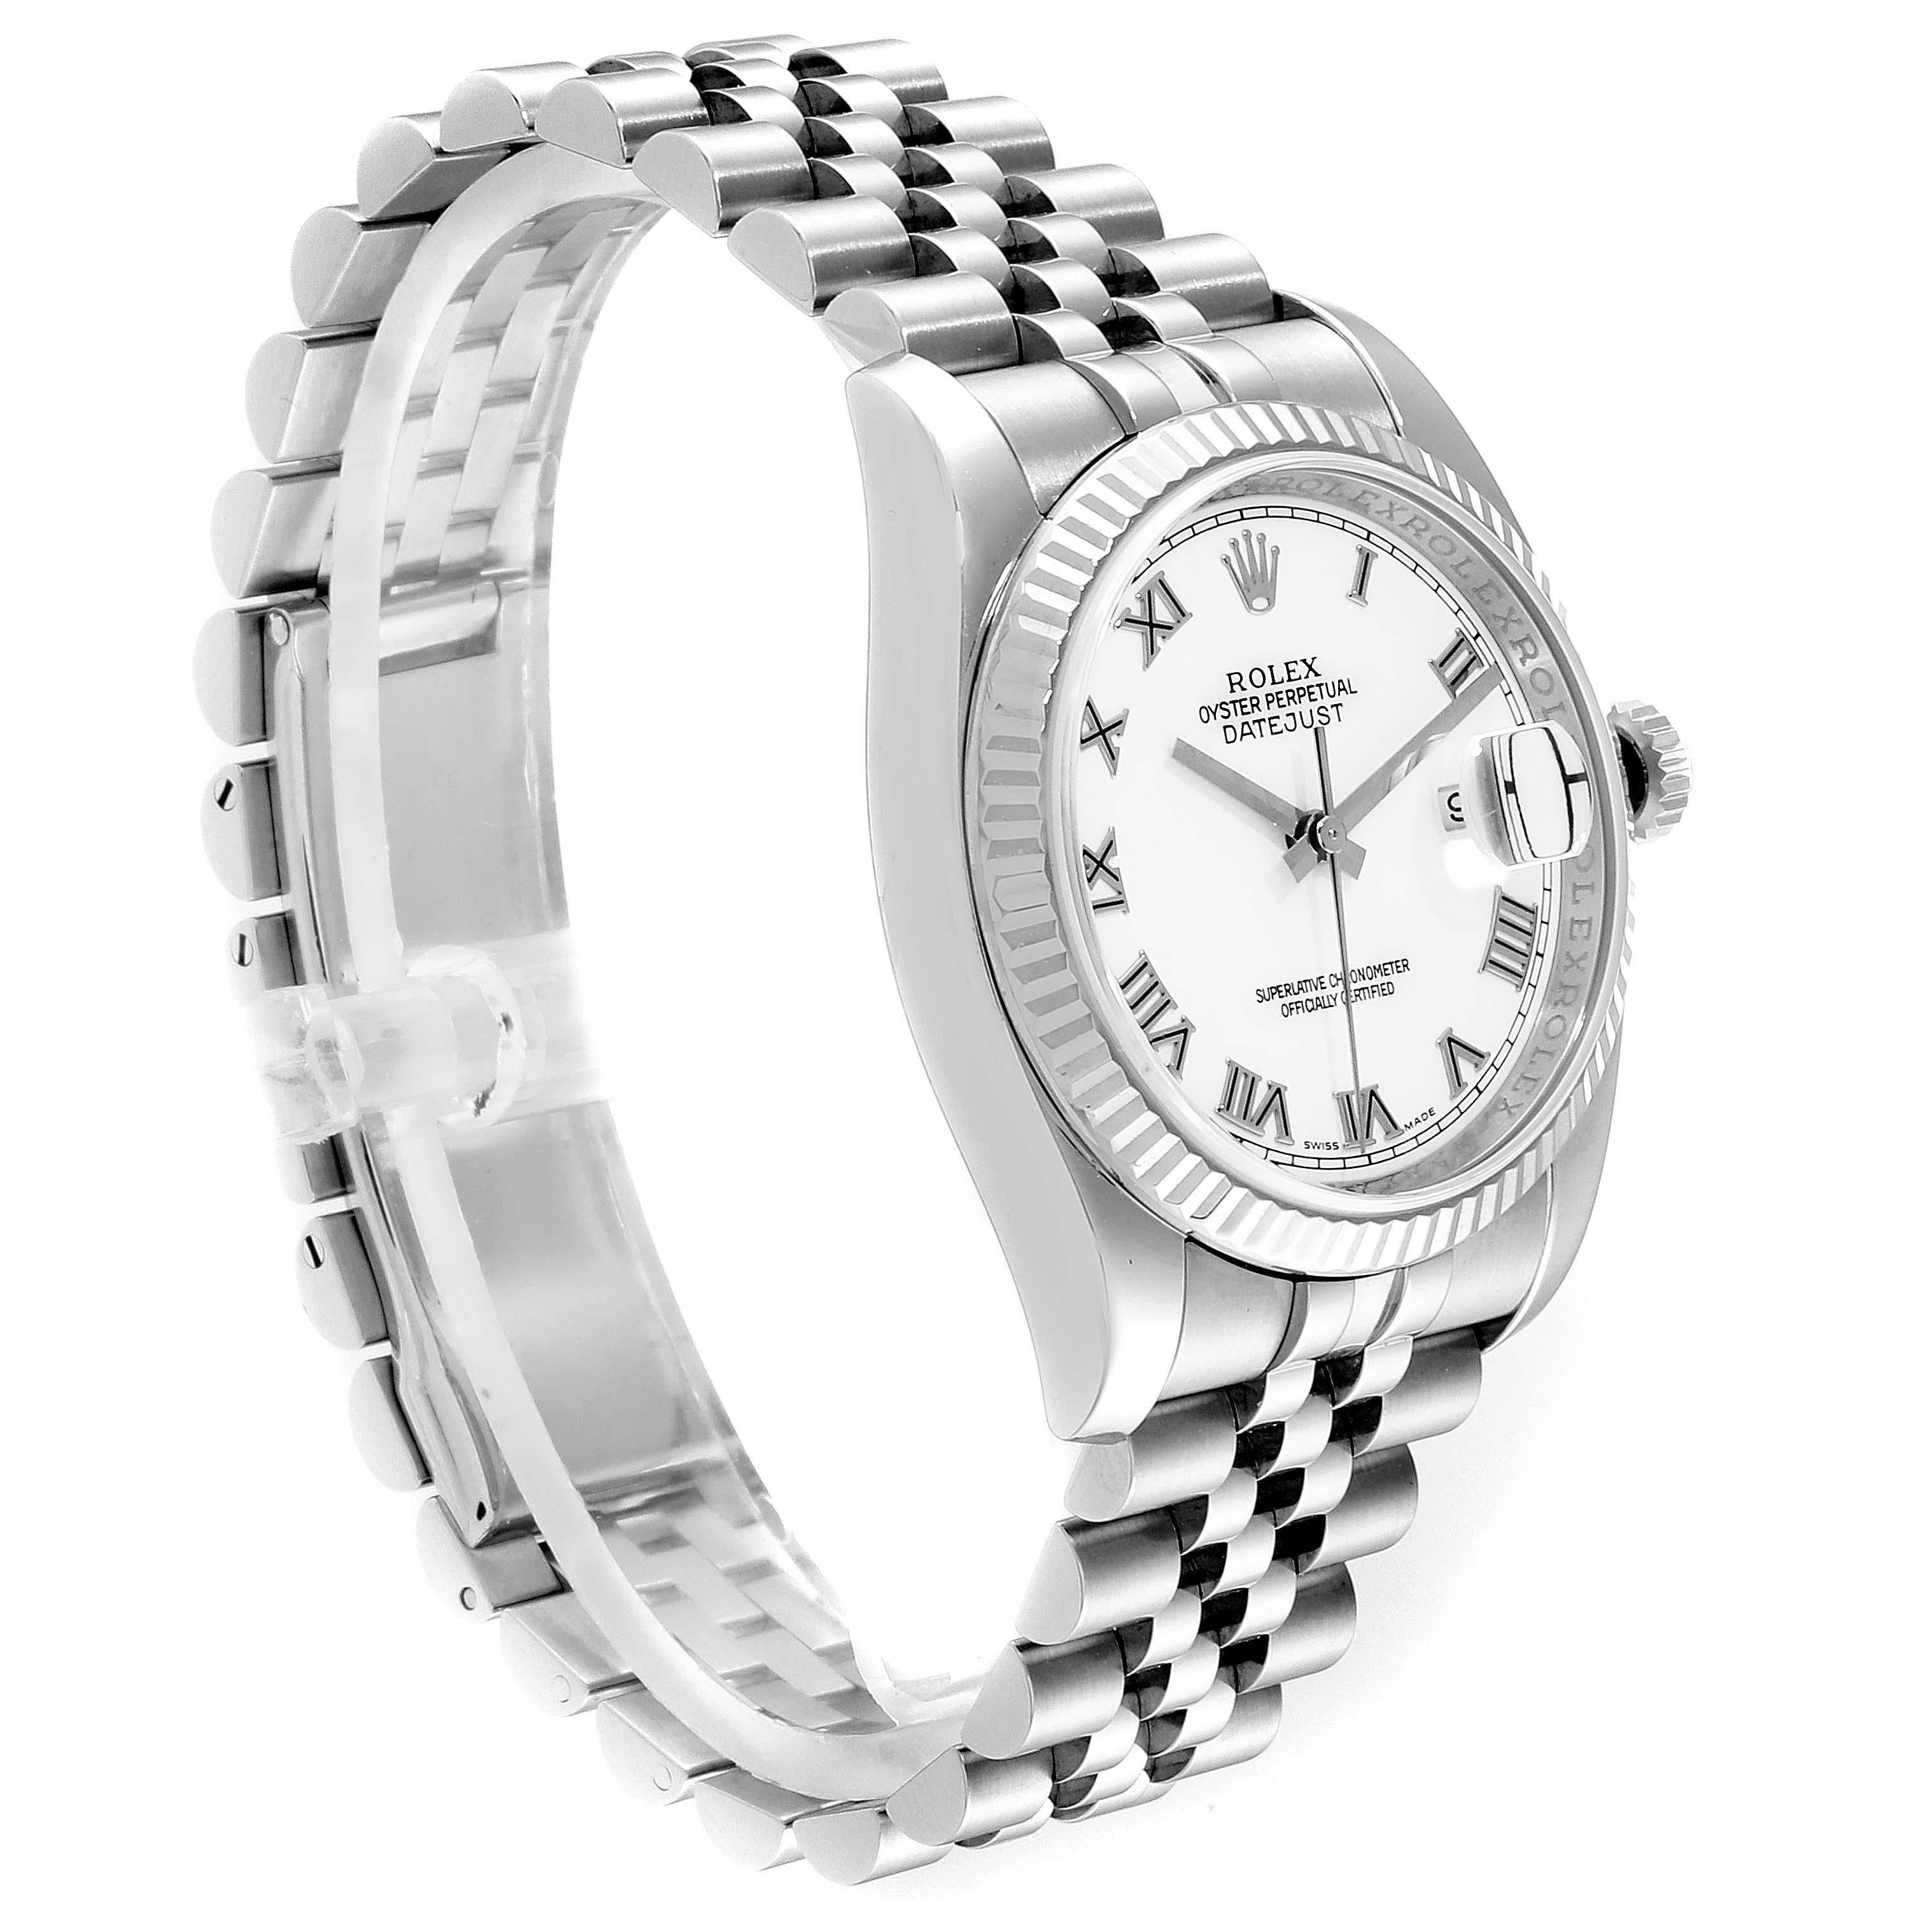 Rolex Datejust Steel White Gold Jubilee Bracelet Watch 116234 In Excellent Condition For Sale In Atlanta, GA